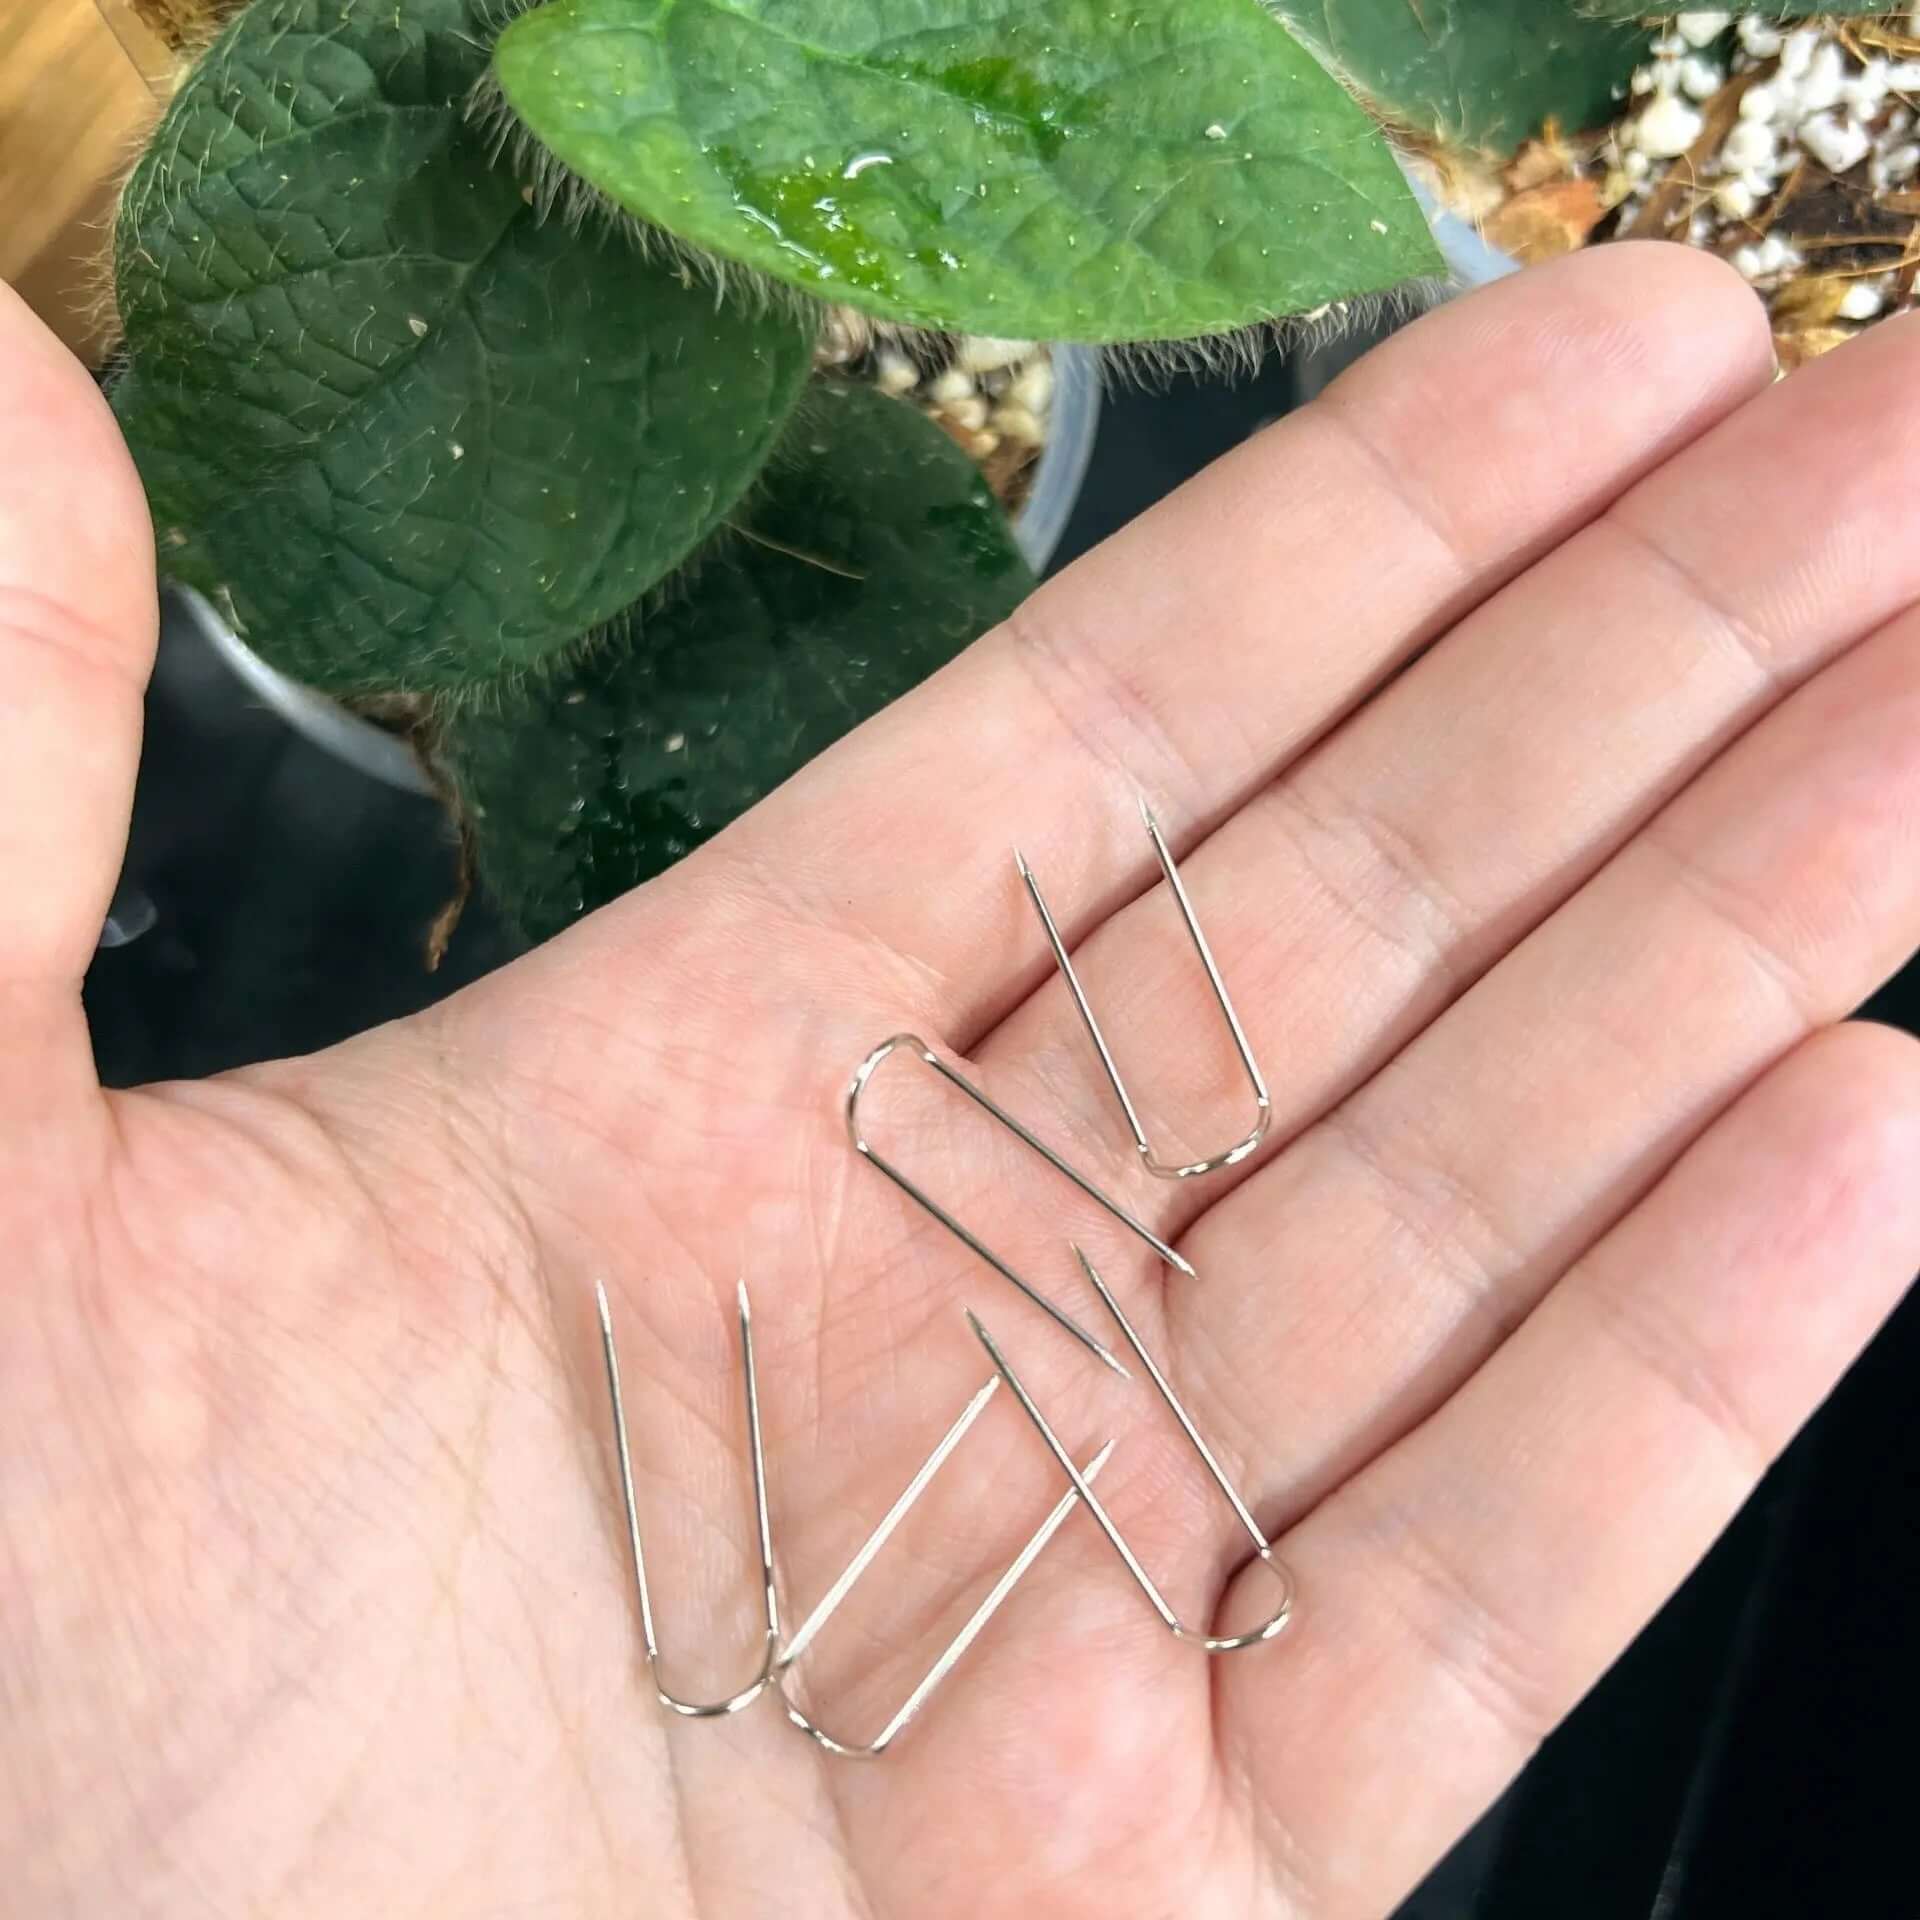 Metal Plant Pins for Moss Pole - Small Size - 5 pcs - SMUKHI